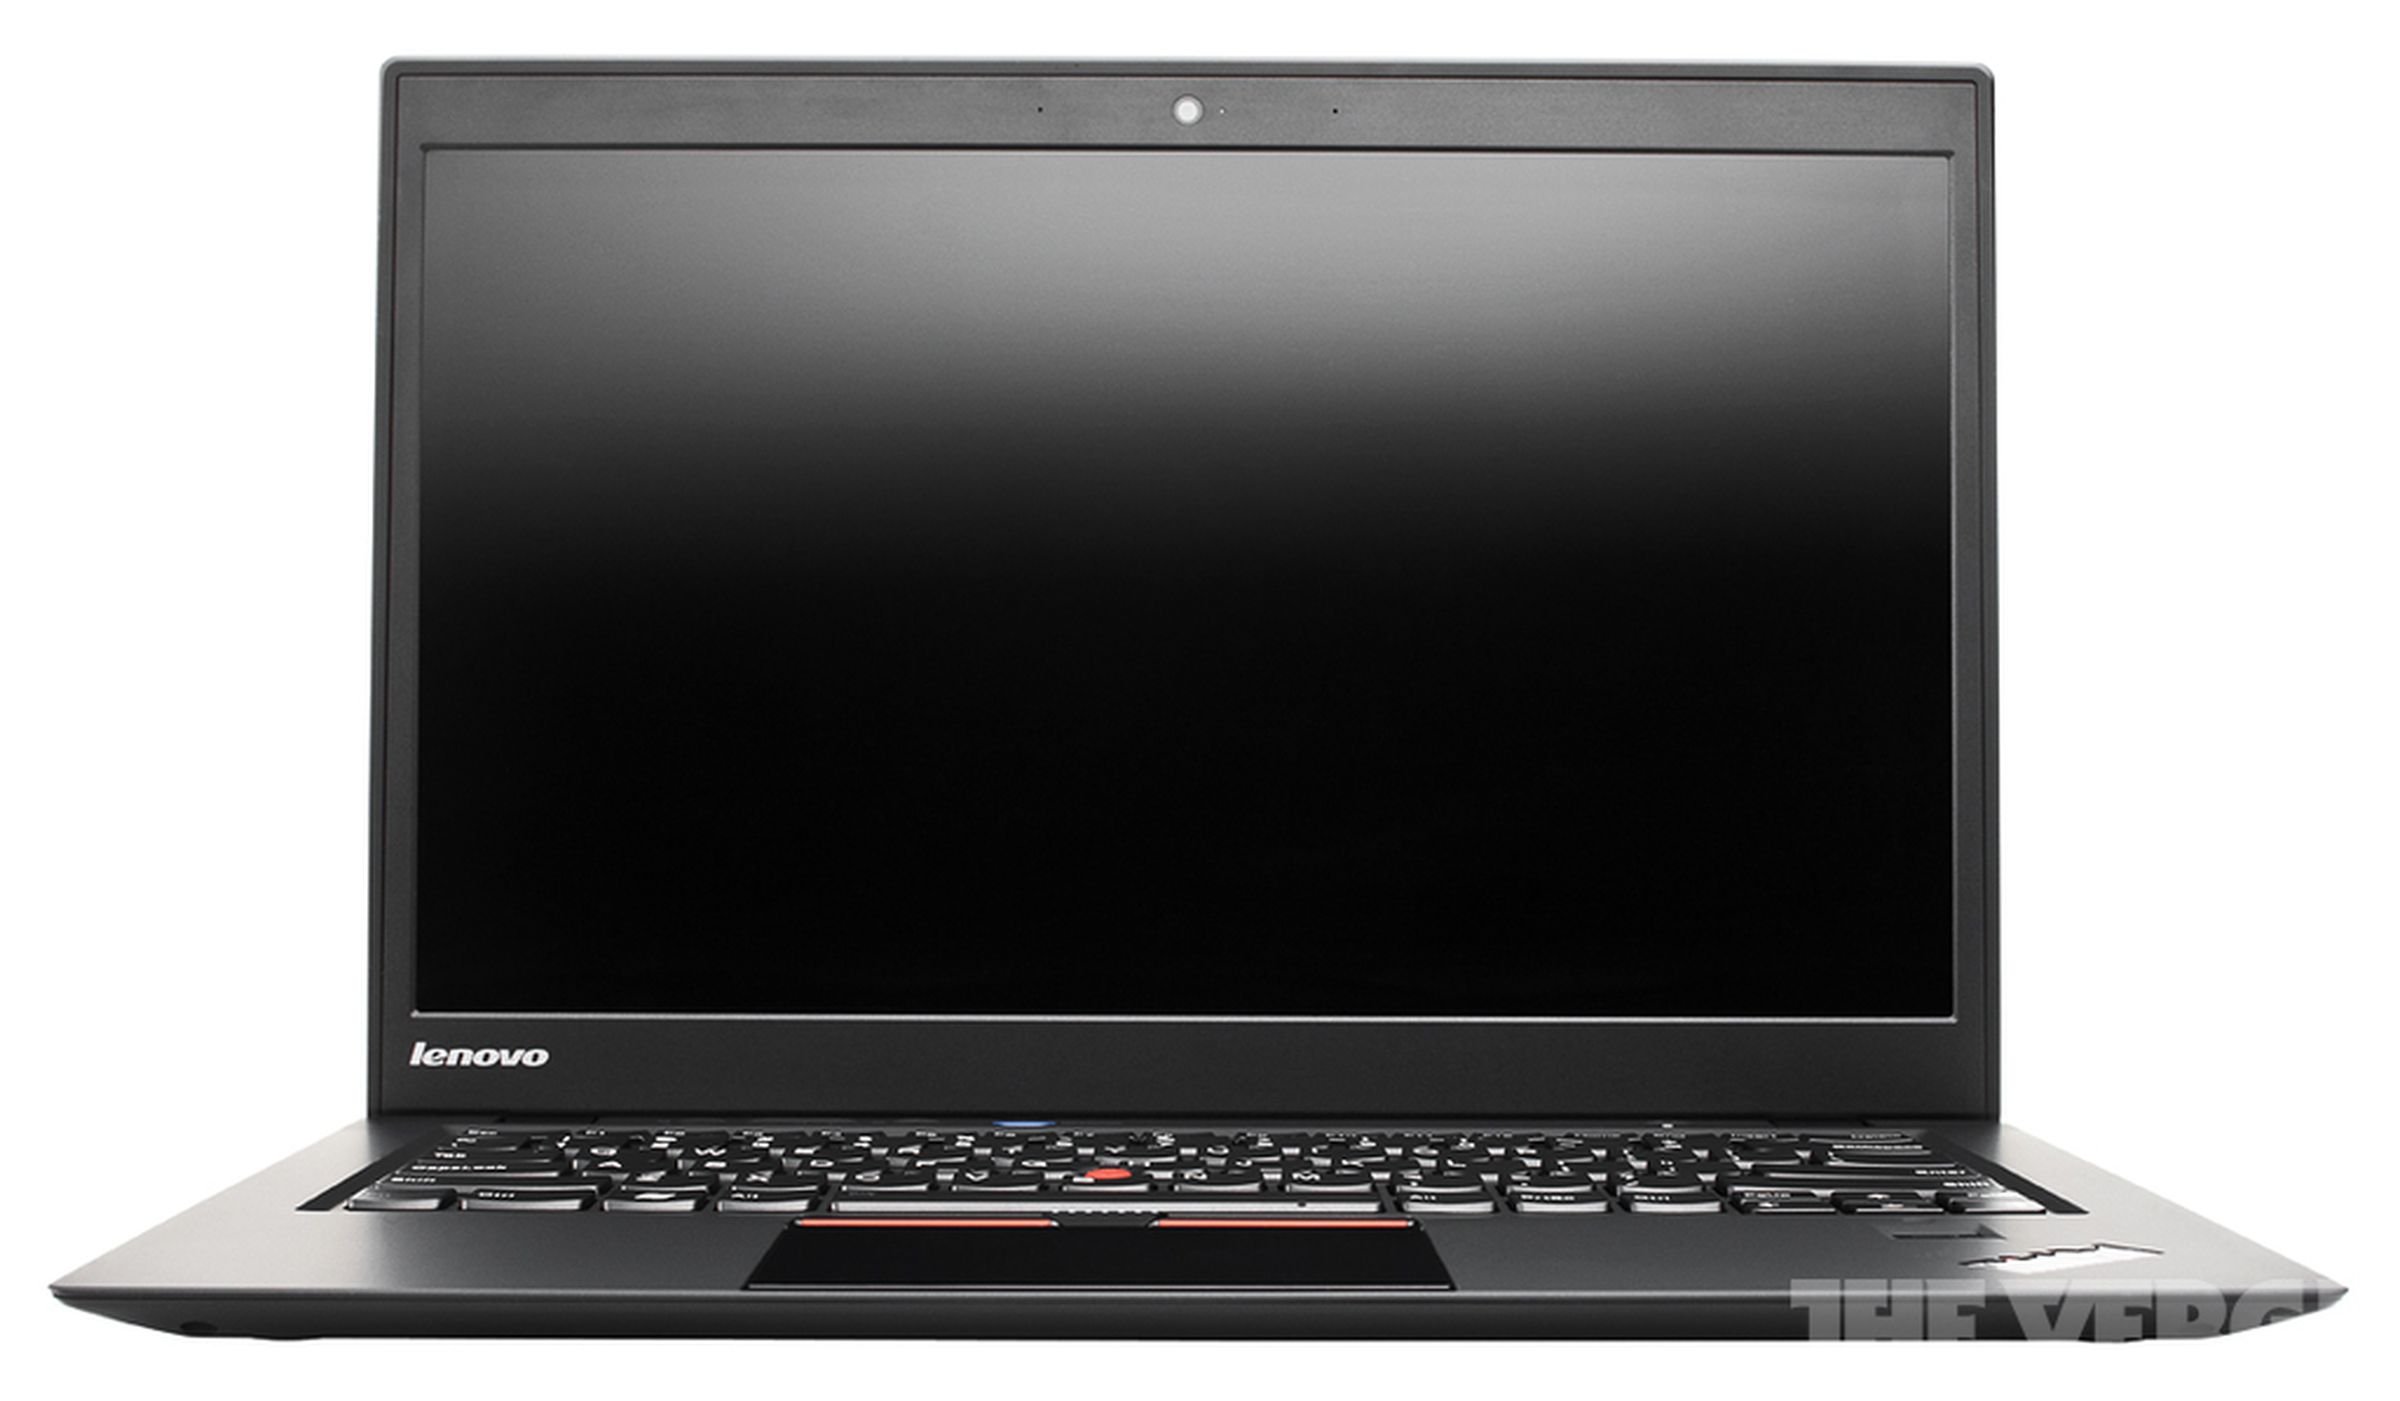 Lenovo ThinkPad X1 Carbon press pictures